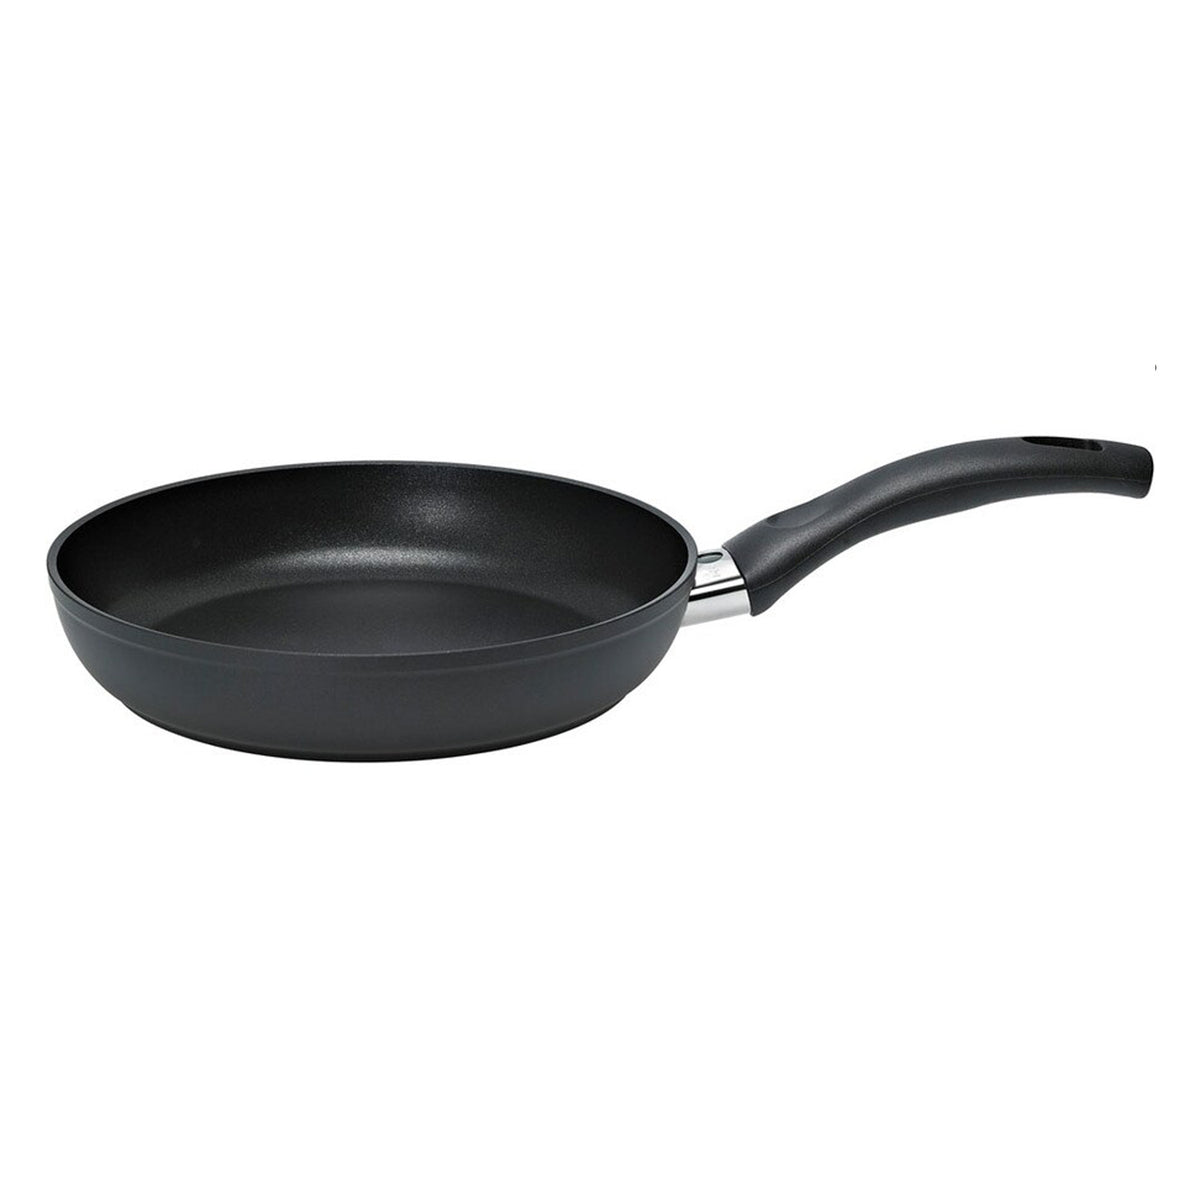 Frying Pan with handle, BlackSize: 26 cm